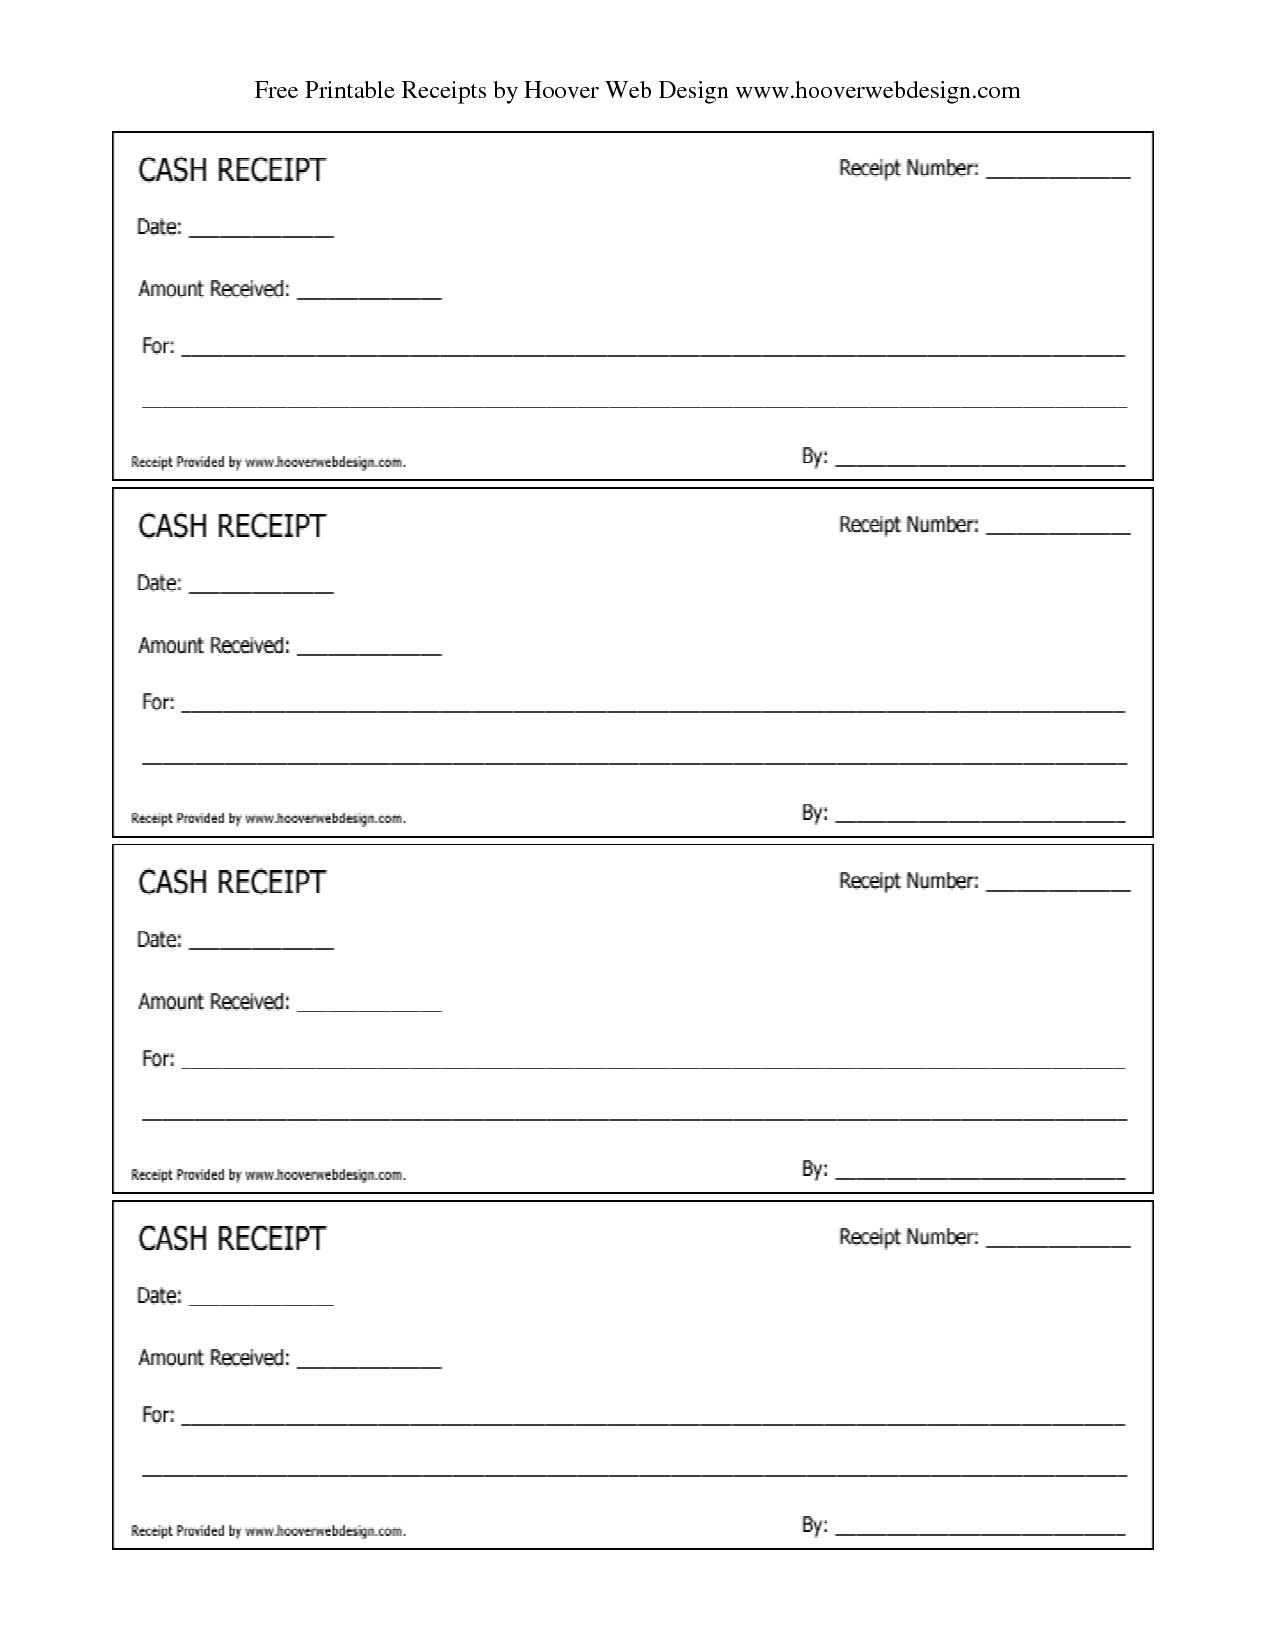 Free Printable Customer Receipts